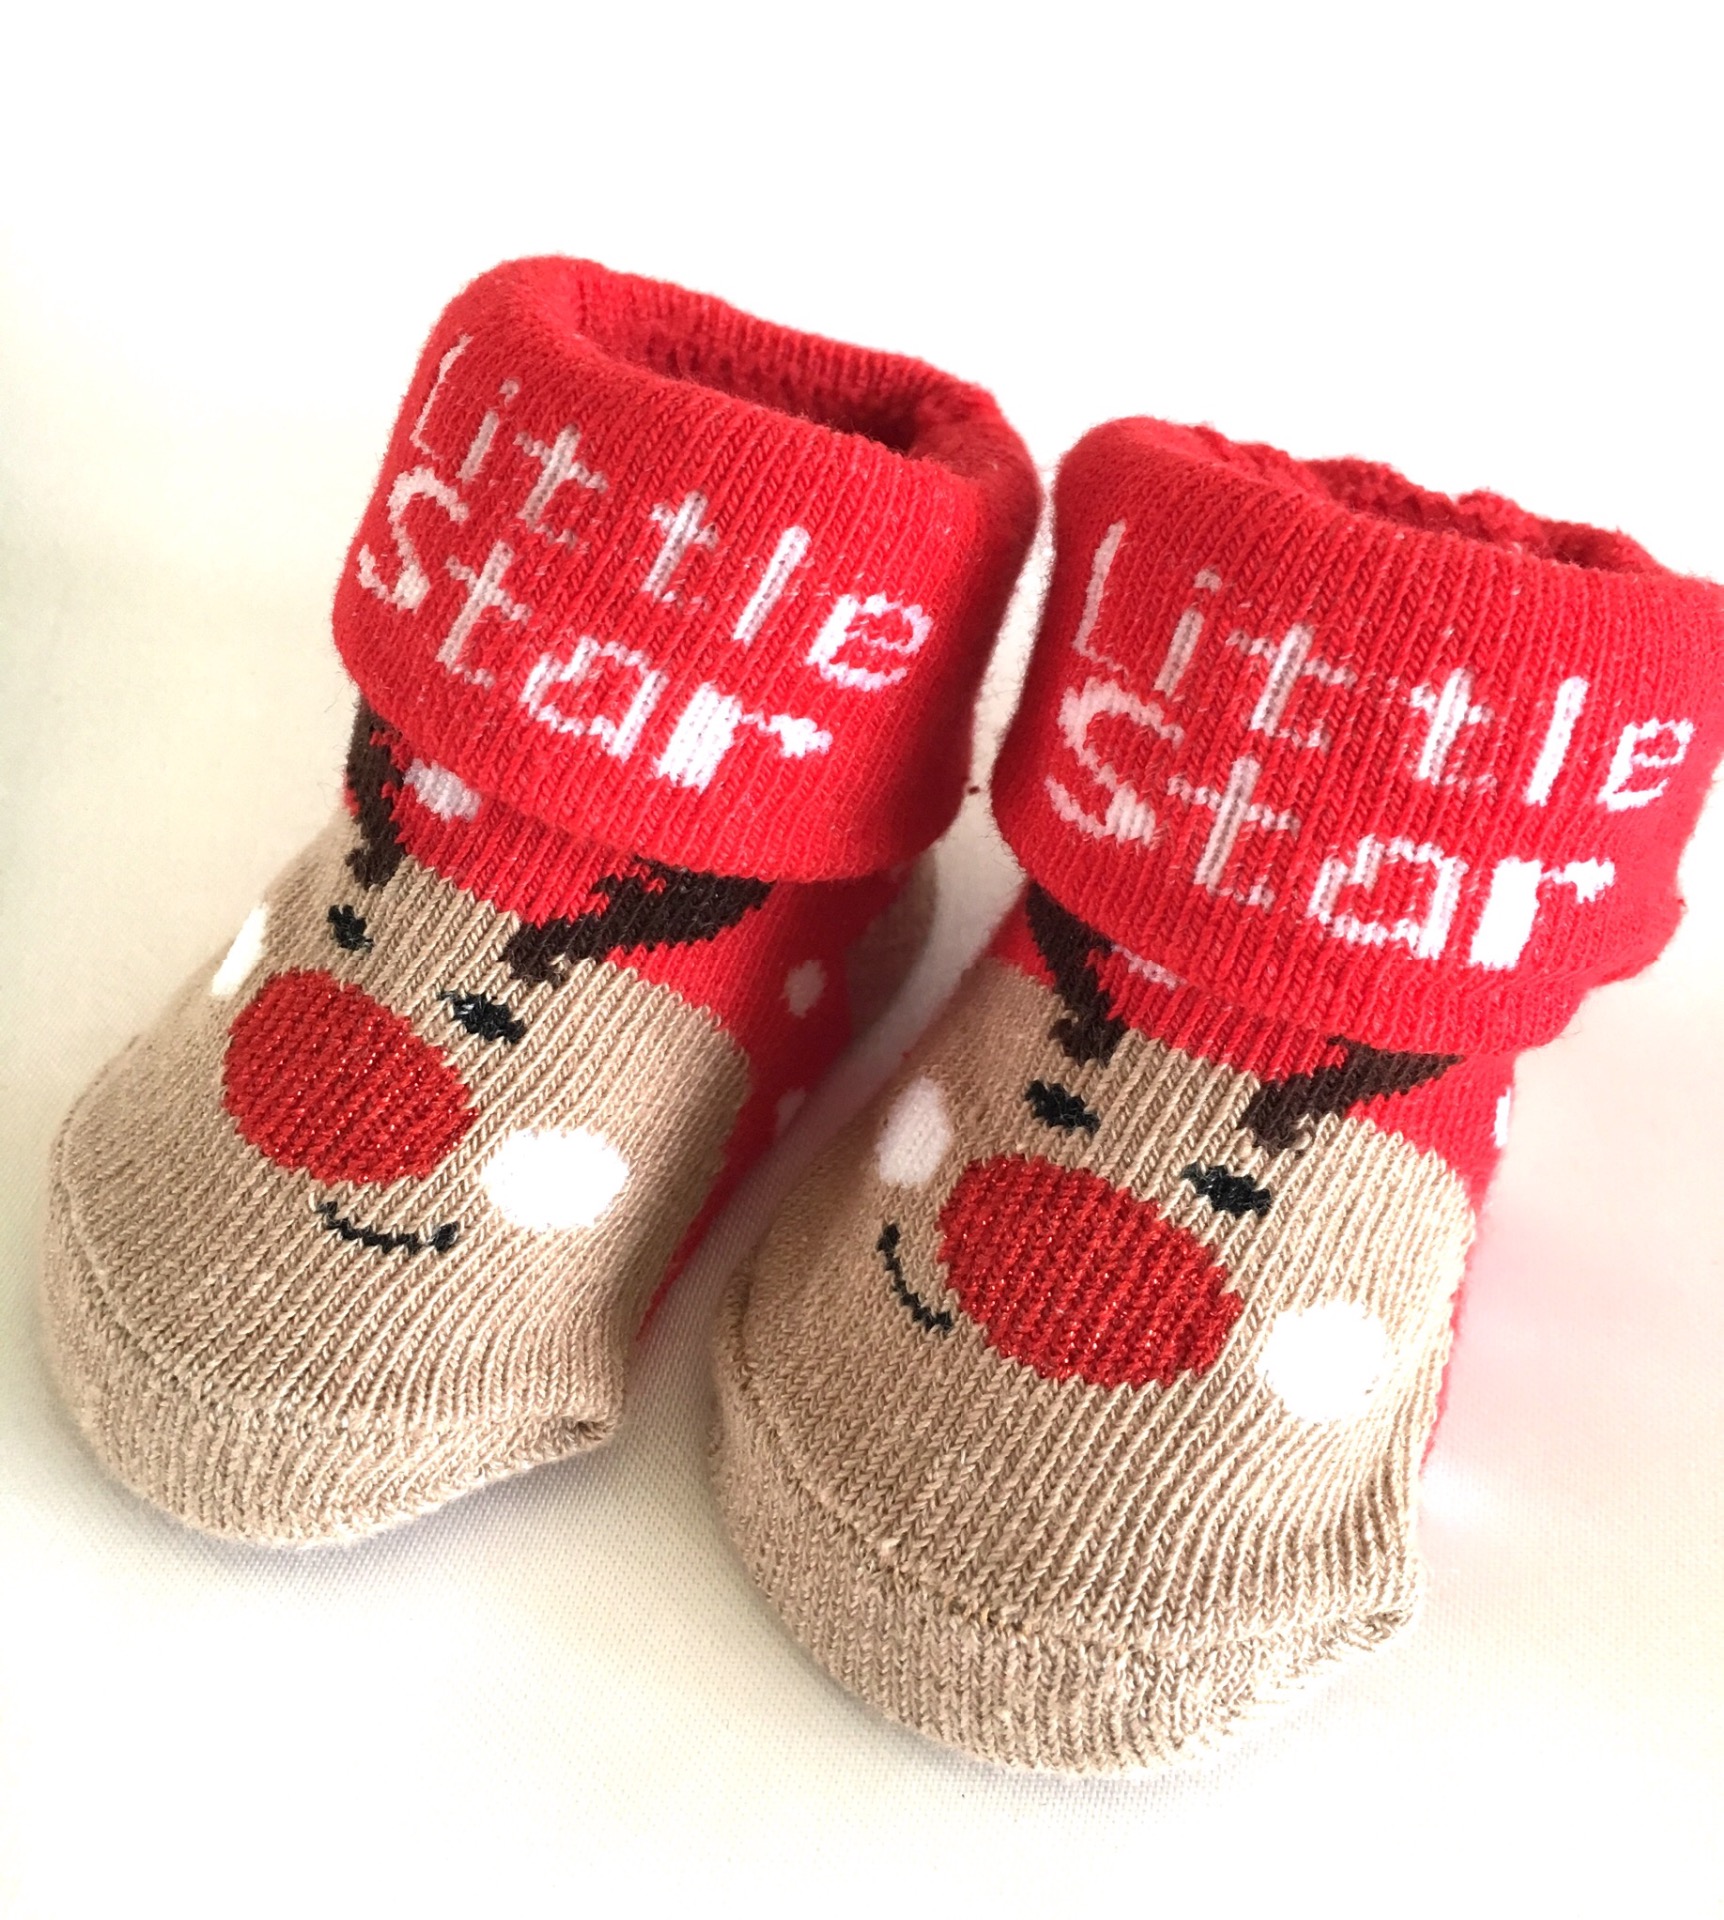 Festive Baby Socks